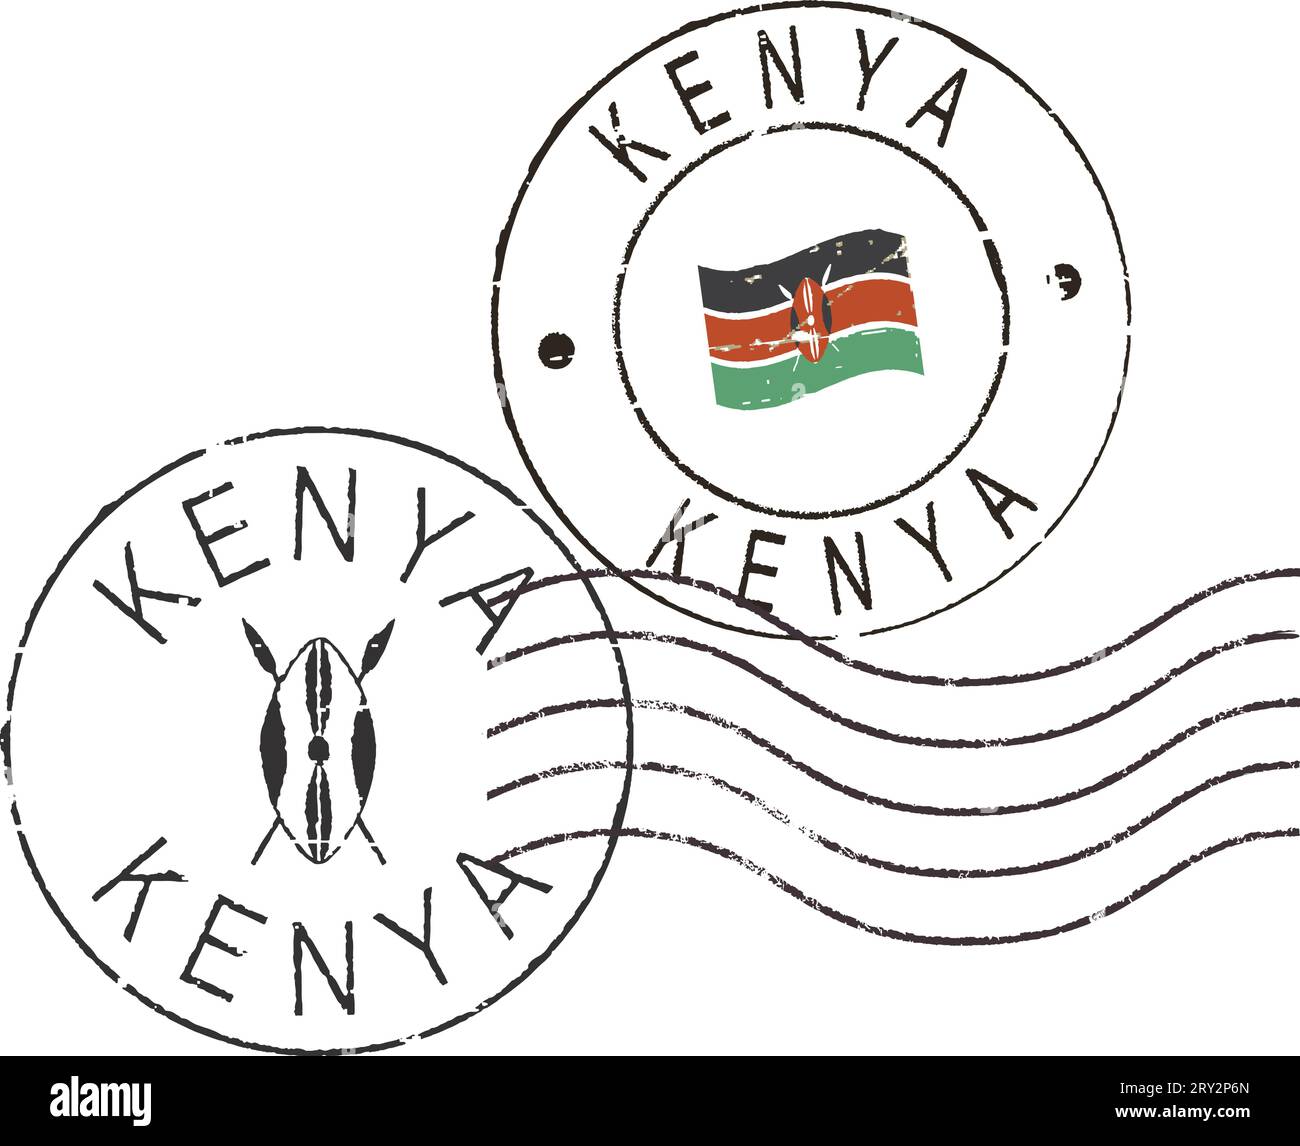 Francobolli grunge postali "Kenya". Illustrazione Vettoriale